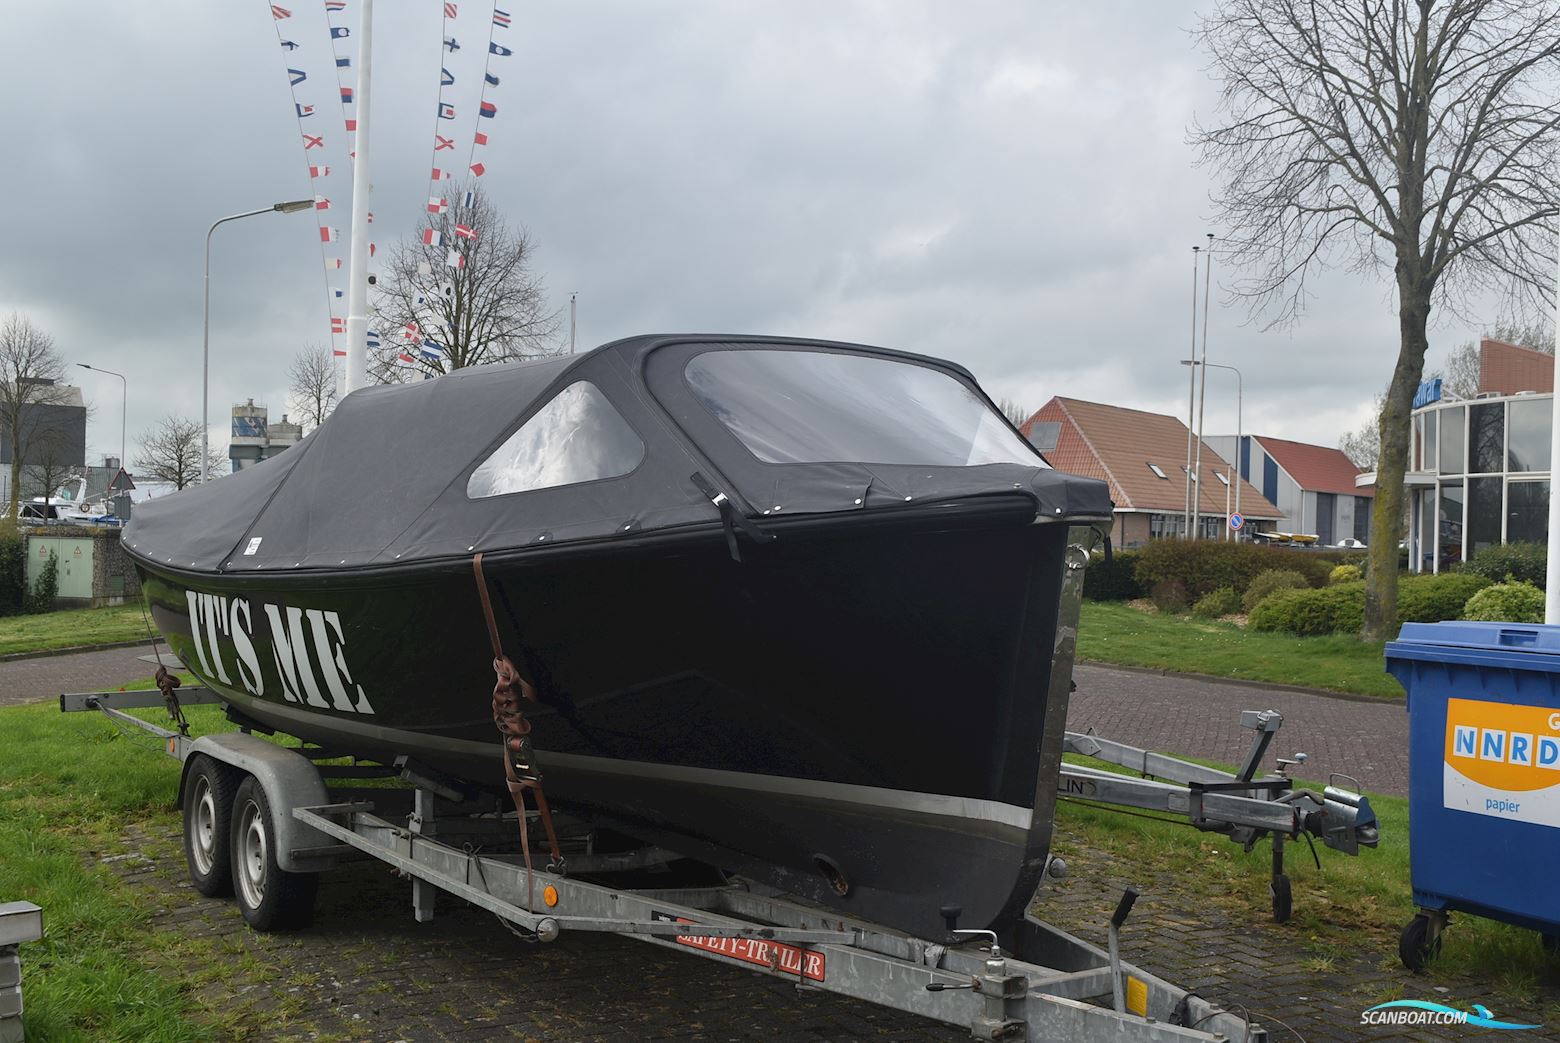 Lifestyle 740 Met Tandemas Trailer Motor boat 2008, with Vetus M3-27 PK engine, The Netherlands